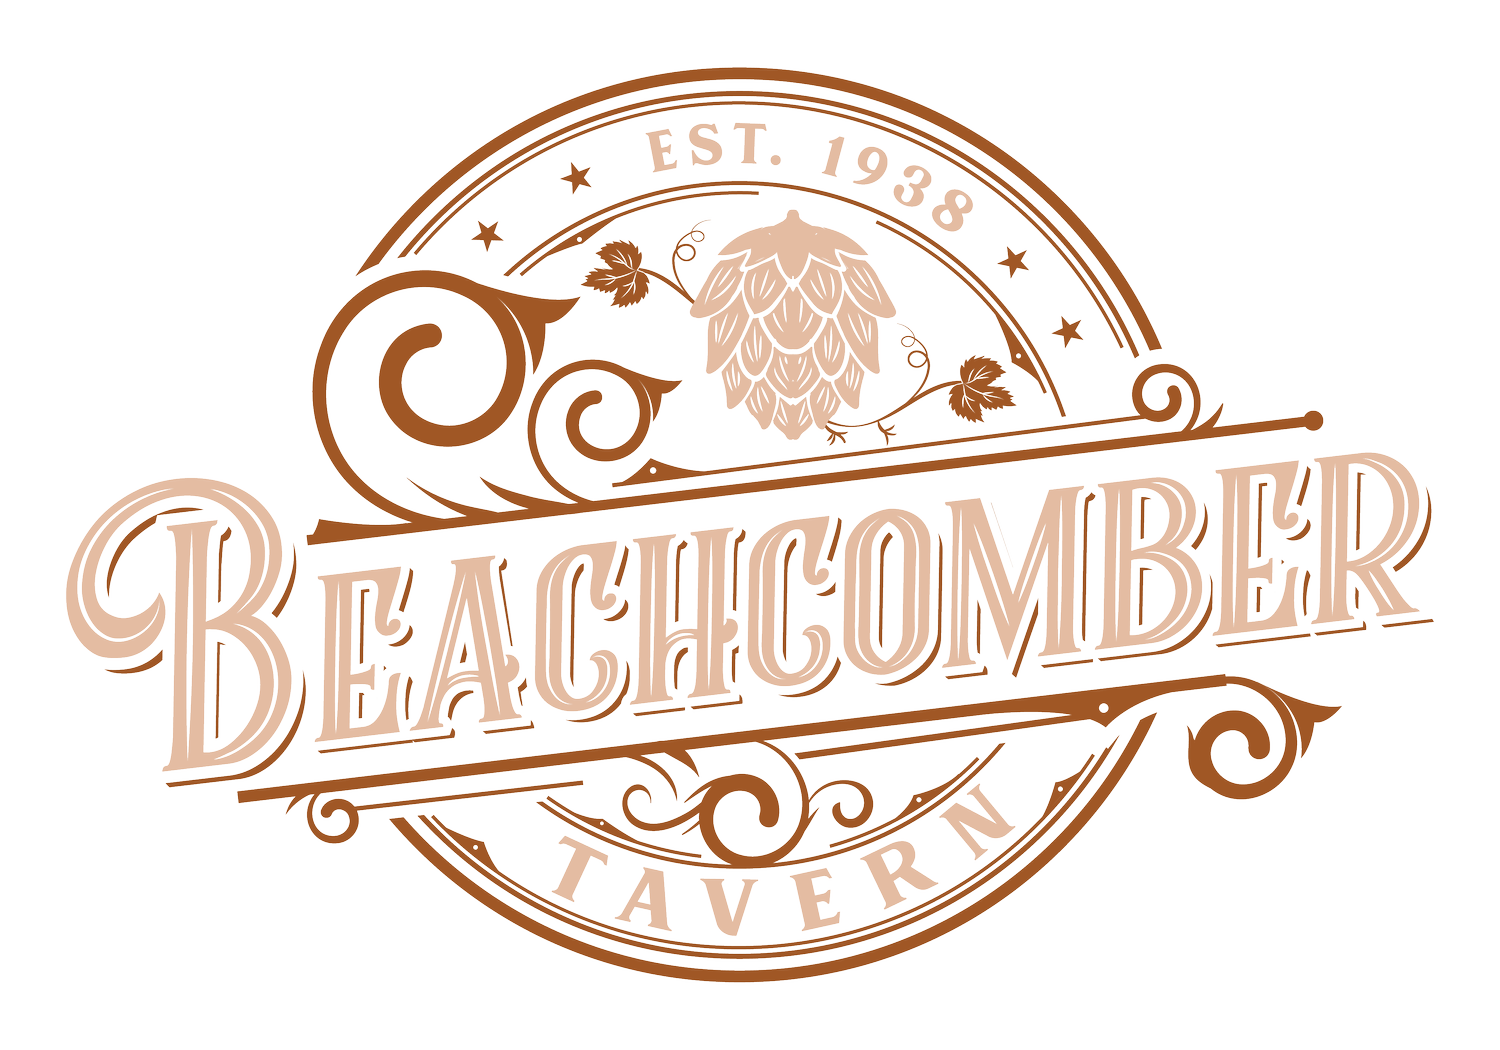 The Beachcomber Tavern